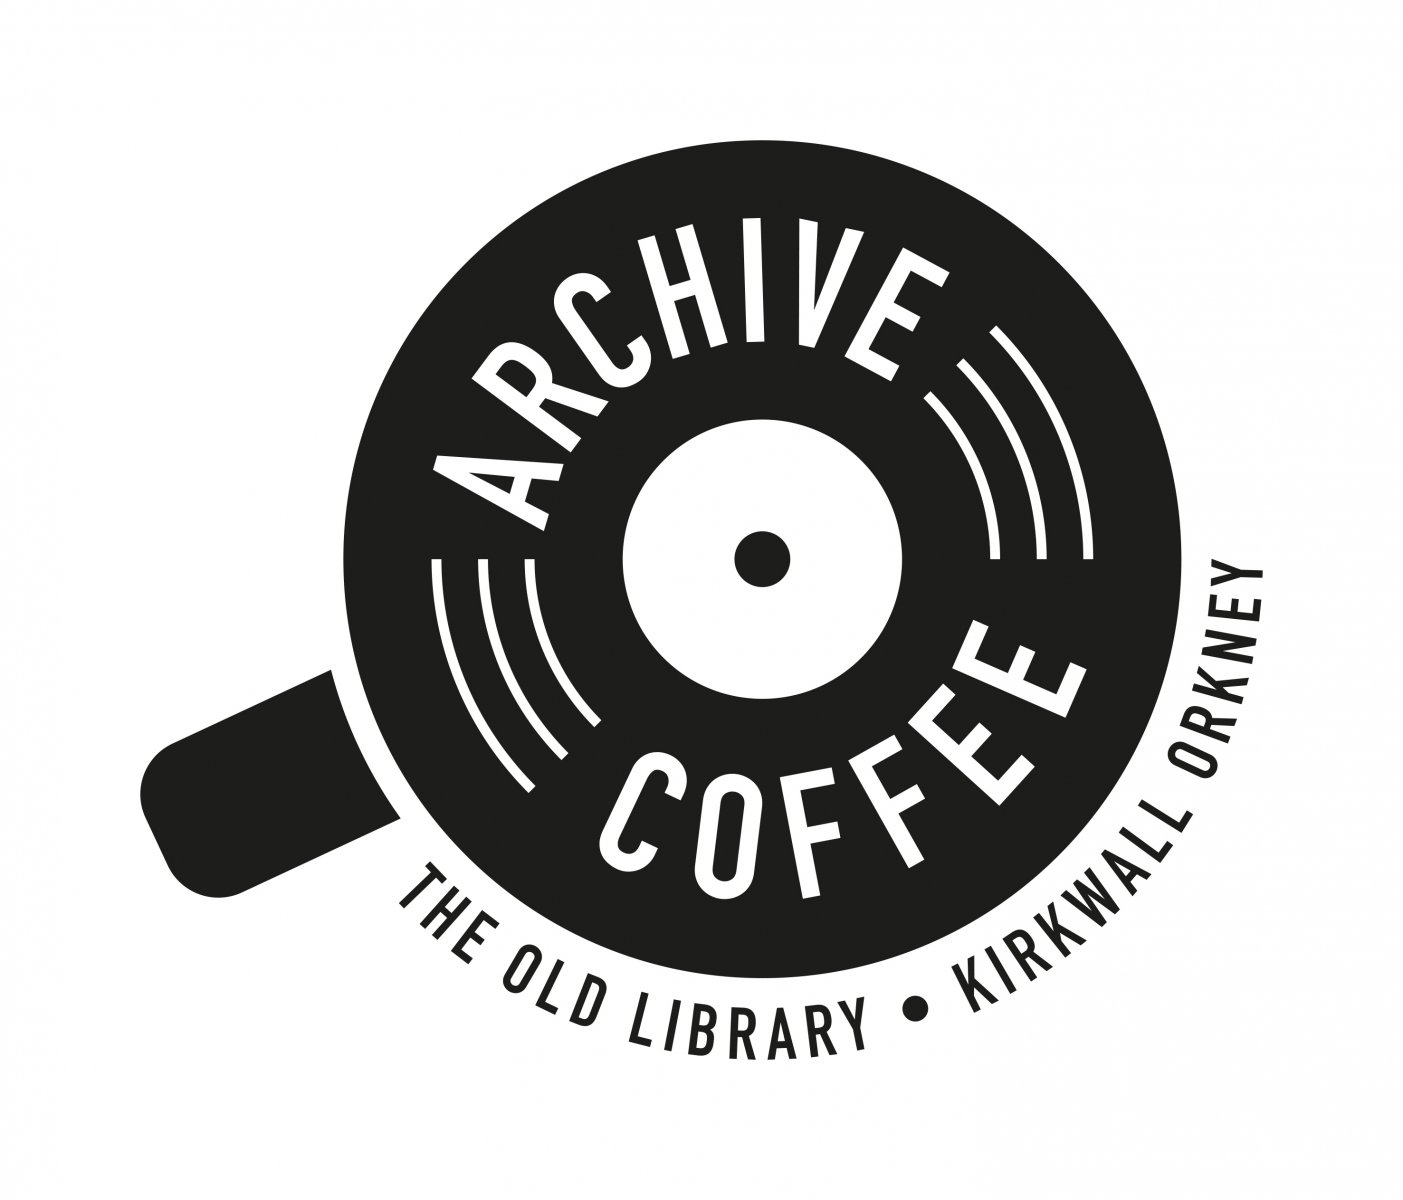 Archive Coffee Logo